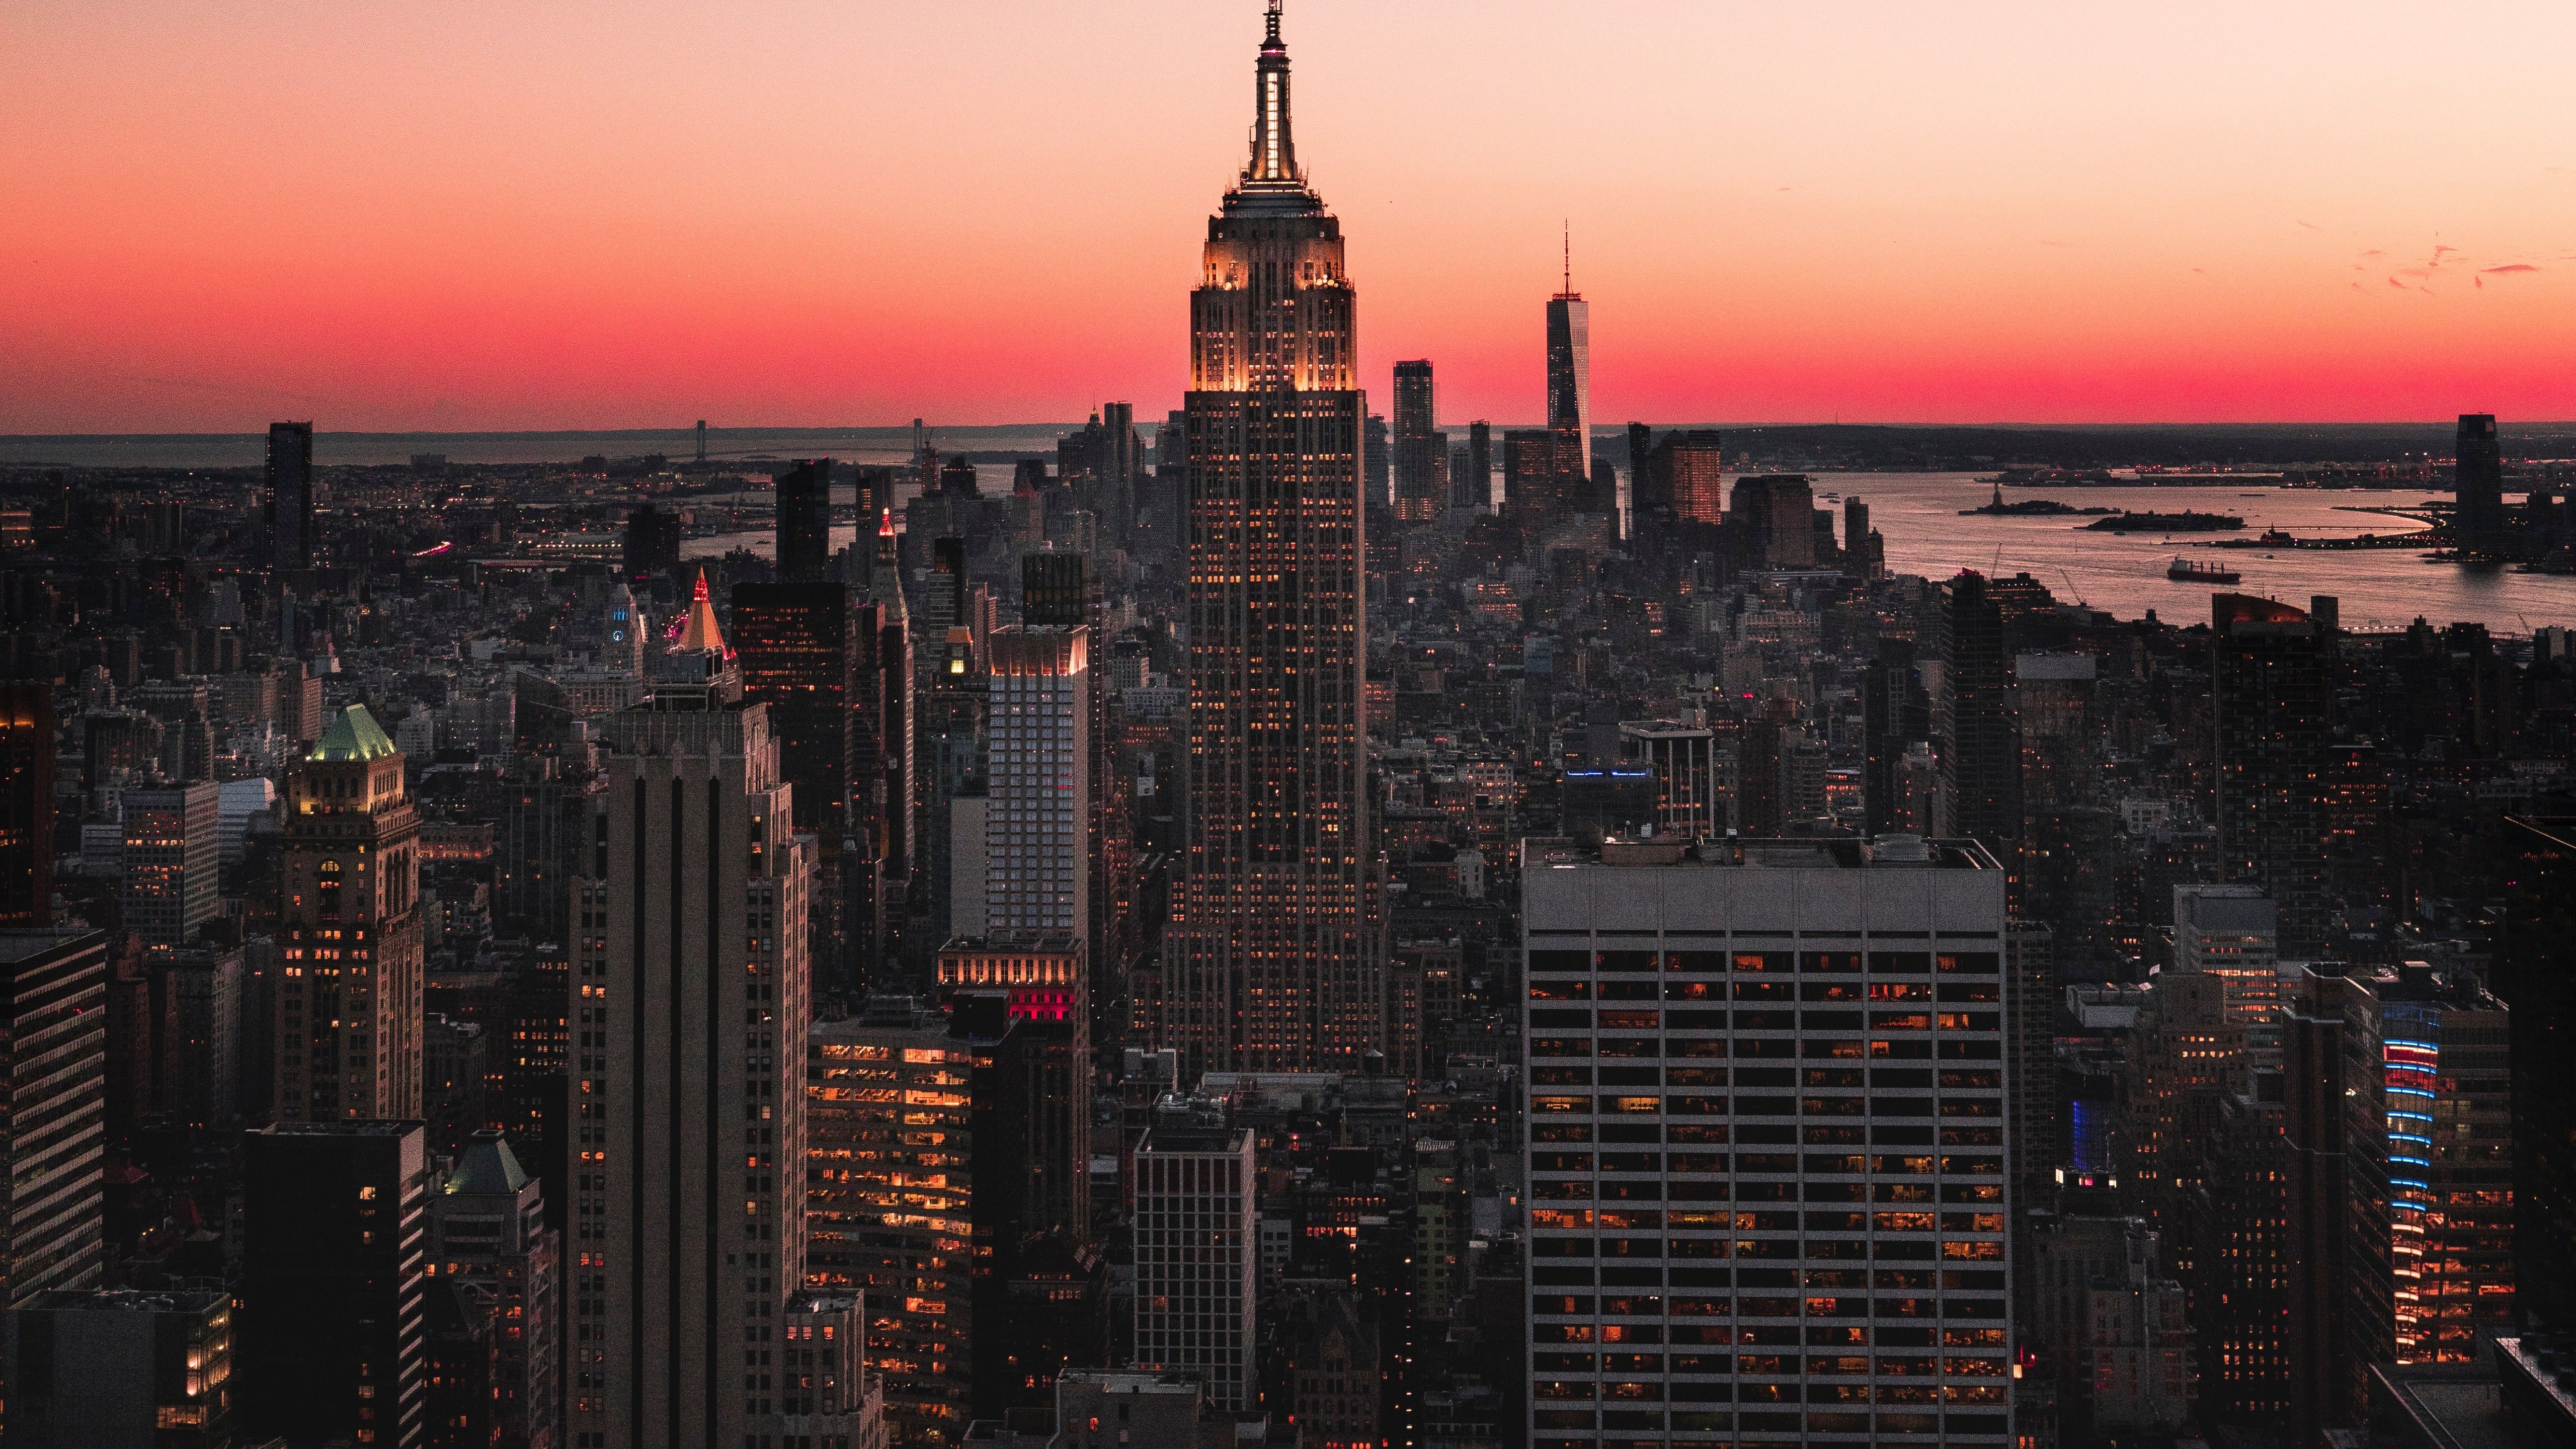 Empire State Building 4K Wallpaper, Skyscraper, New York City, Sunset, Cityscape, Skyline, Urban, 5K, World